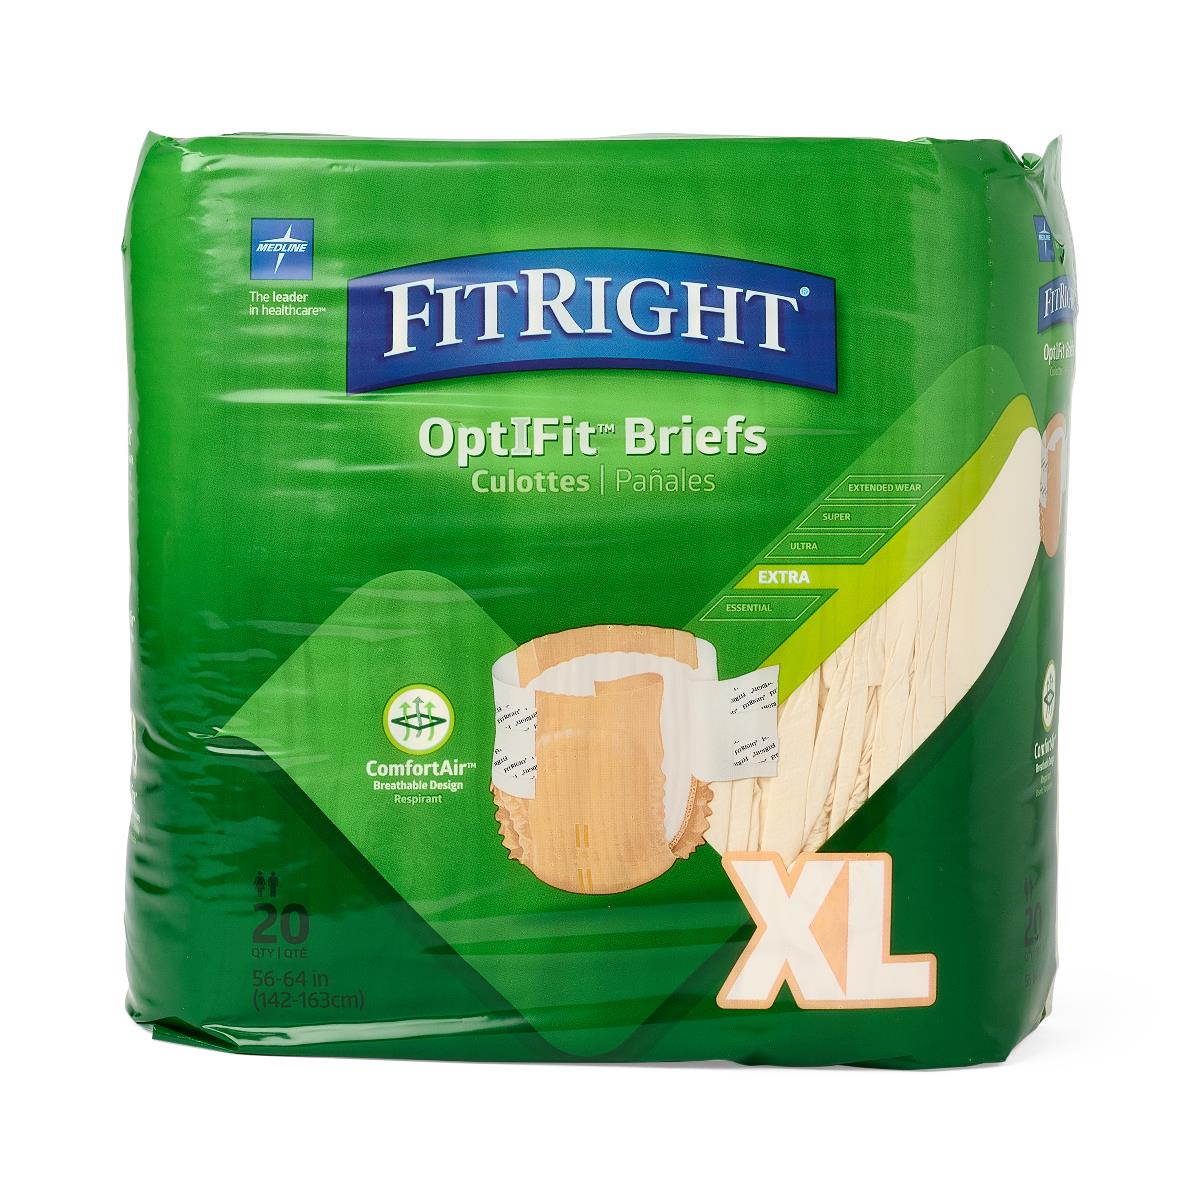 Medline FitRight OptiFit Extra Brief Size XL 56-64, 80/cs FITEXTRAXL –  Advanced Healthmart